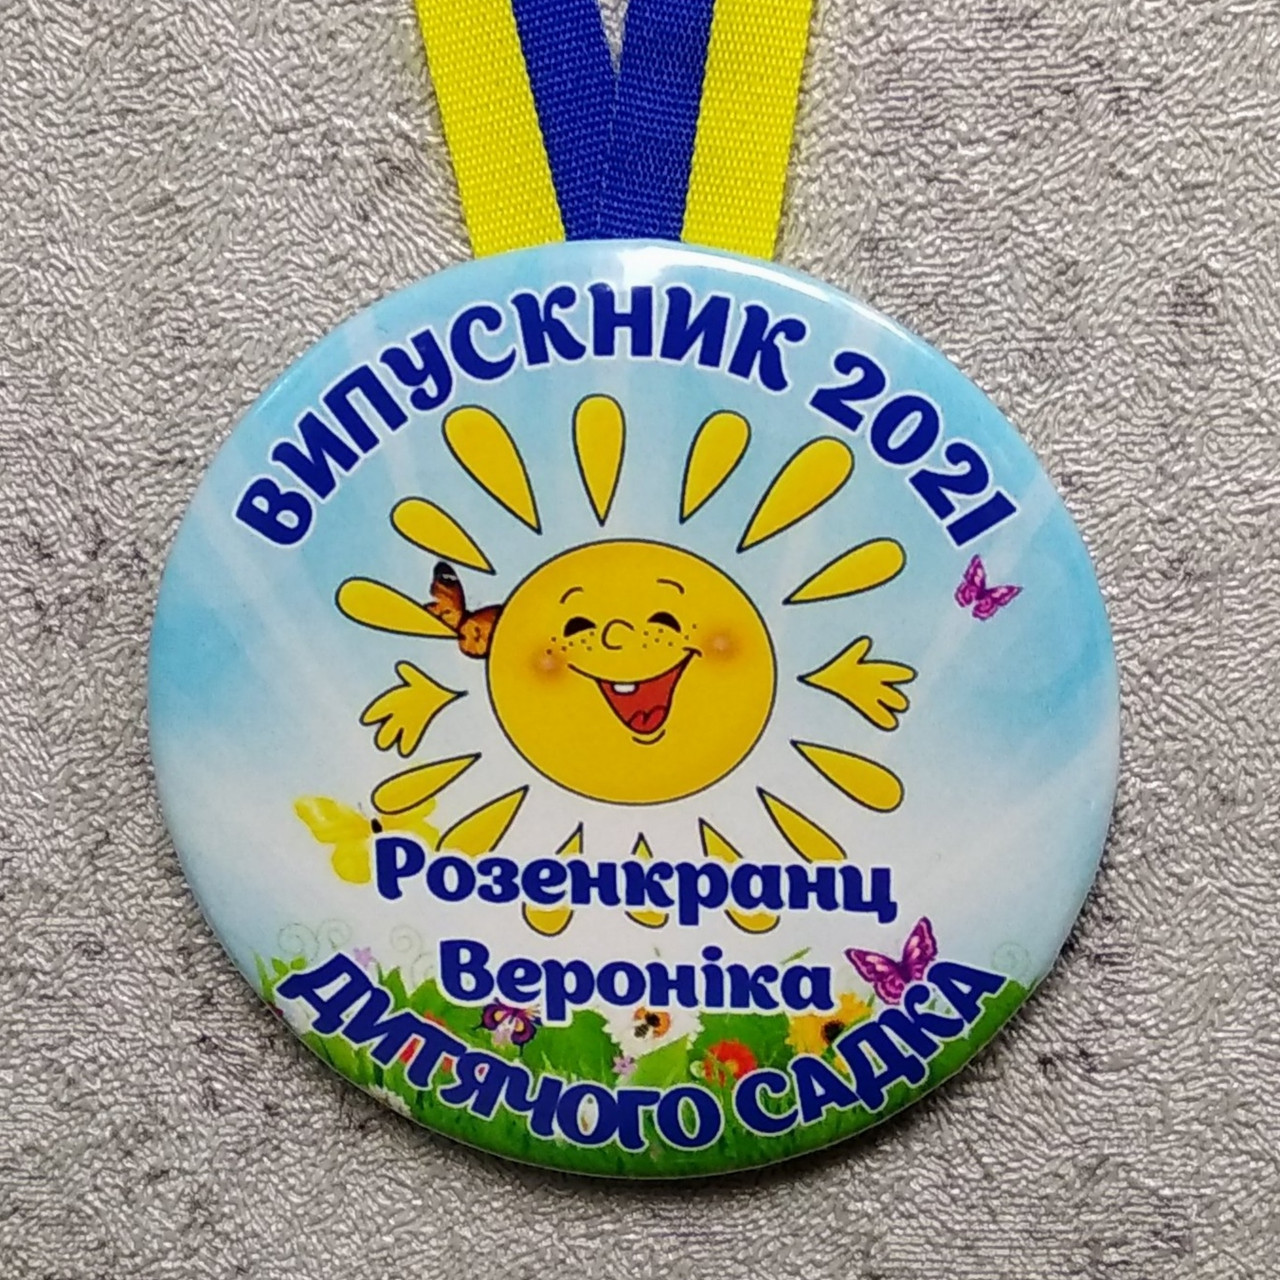 Іменна медаль випускника дитячого садка "Сонечко"